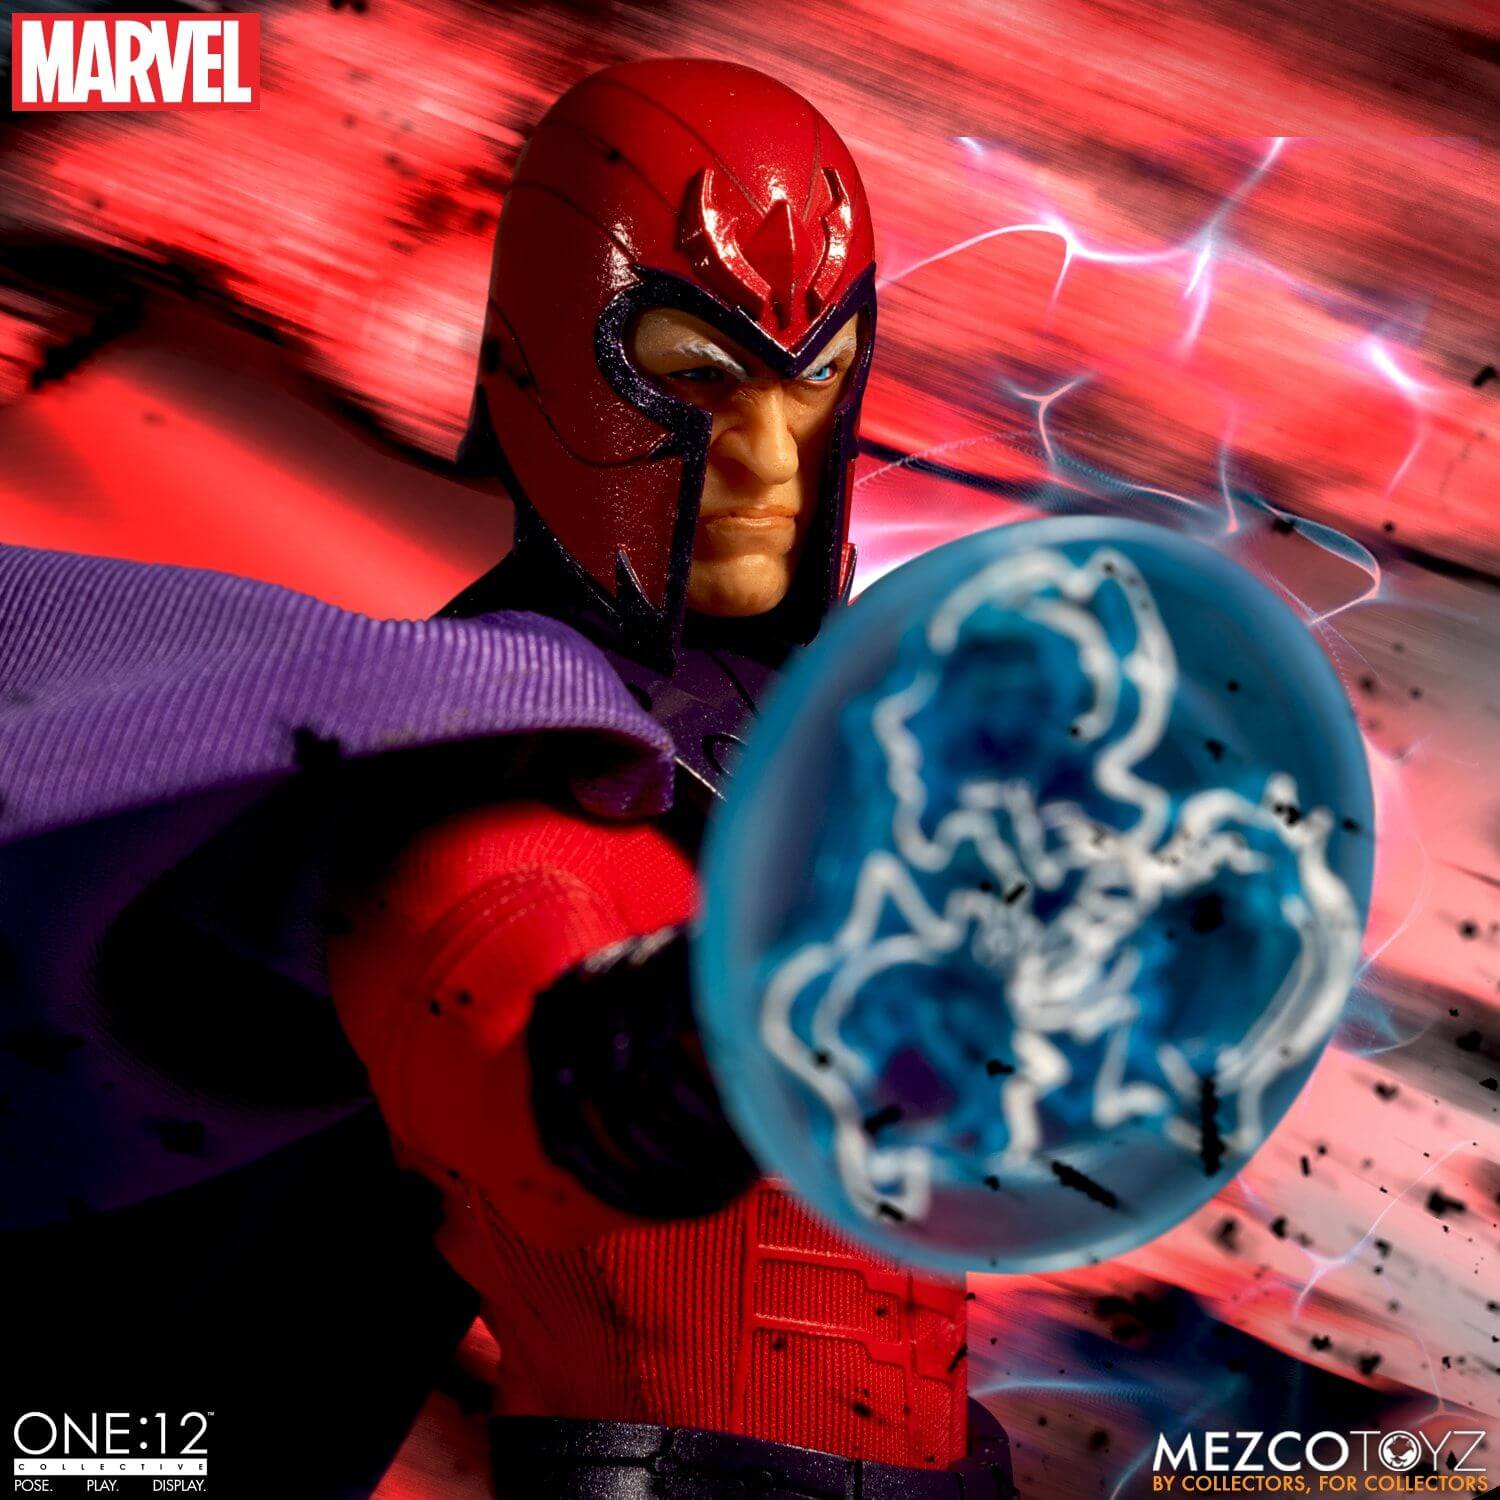 Mezco One:12 Collective Magneto -4ColorHeroes